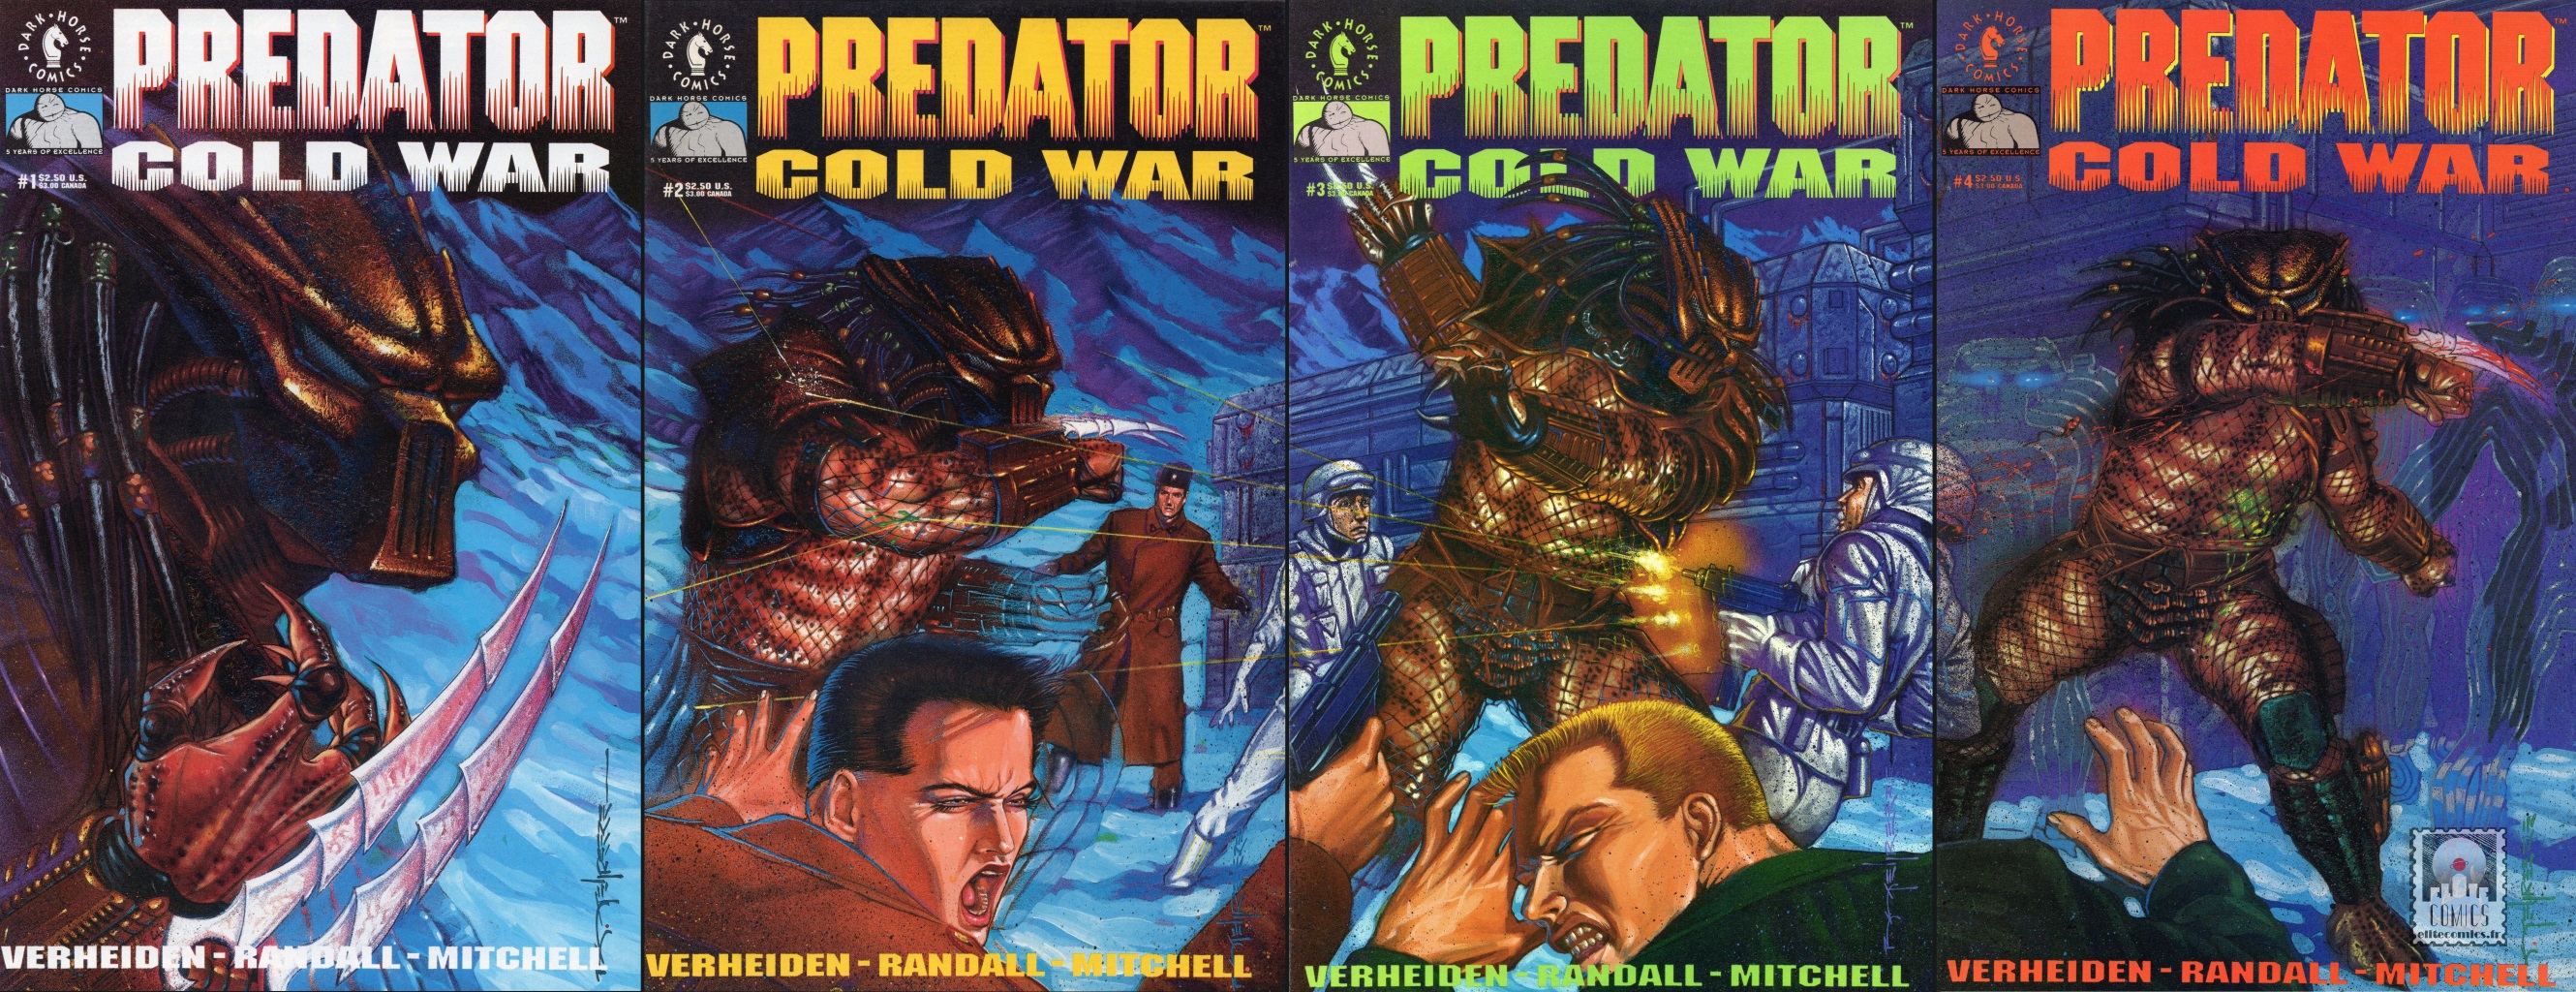 predator cold war 1991 covers